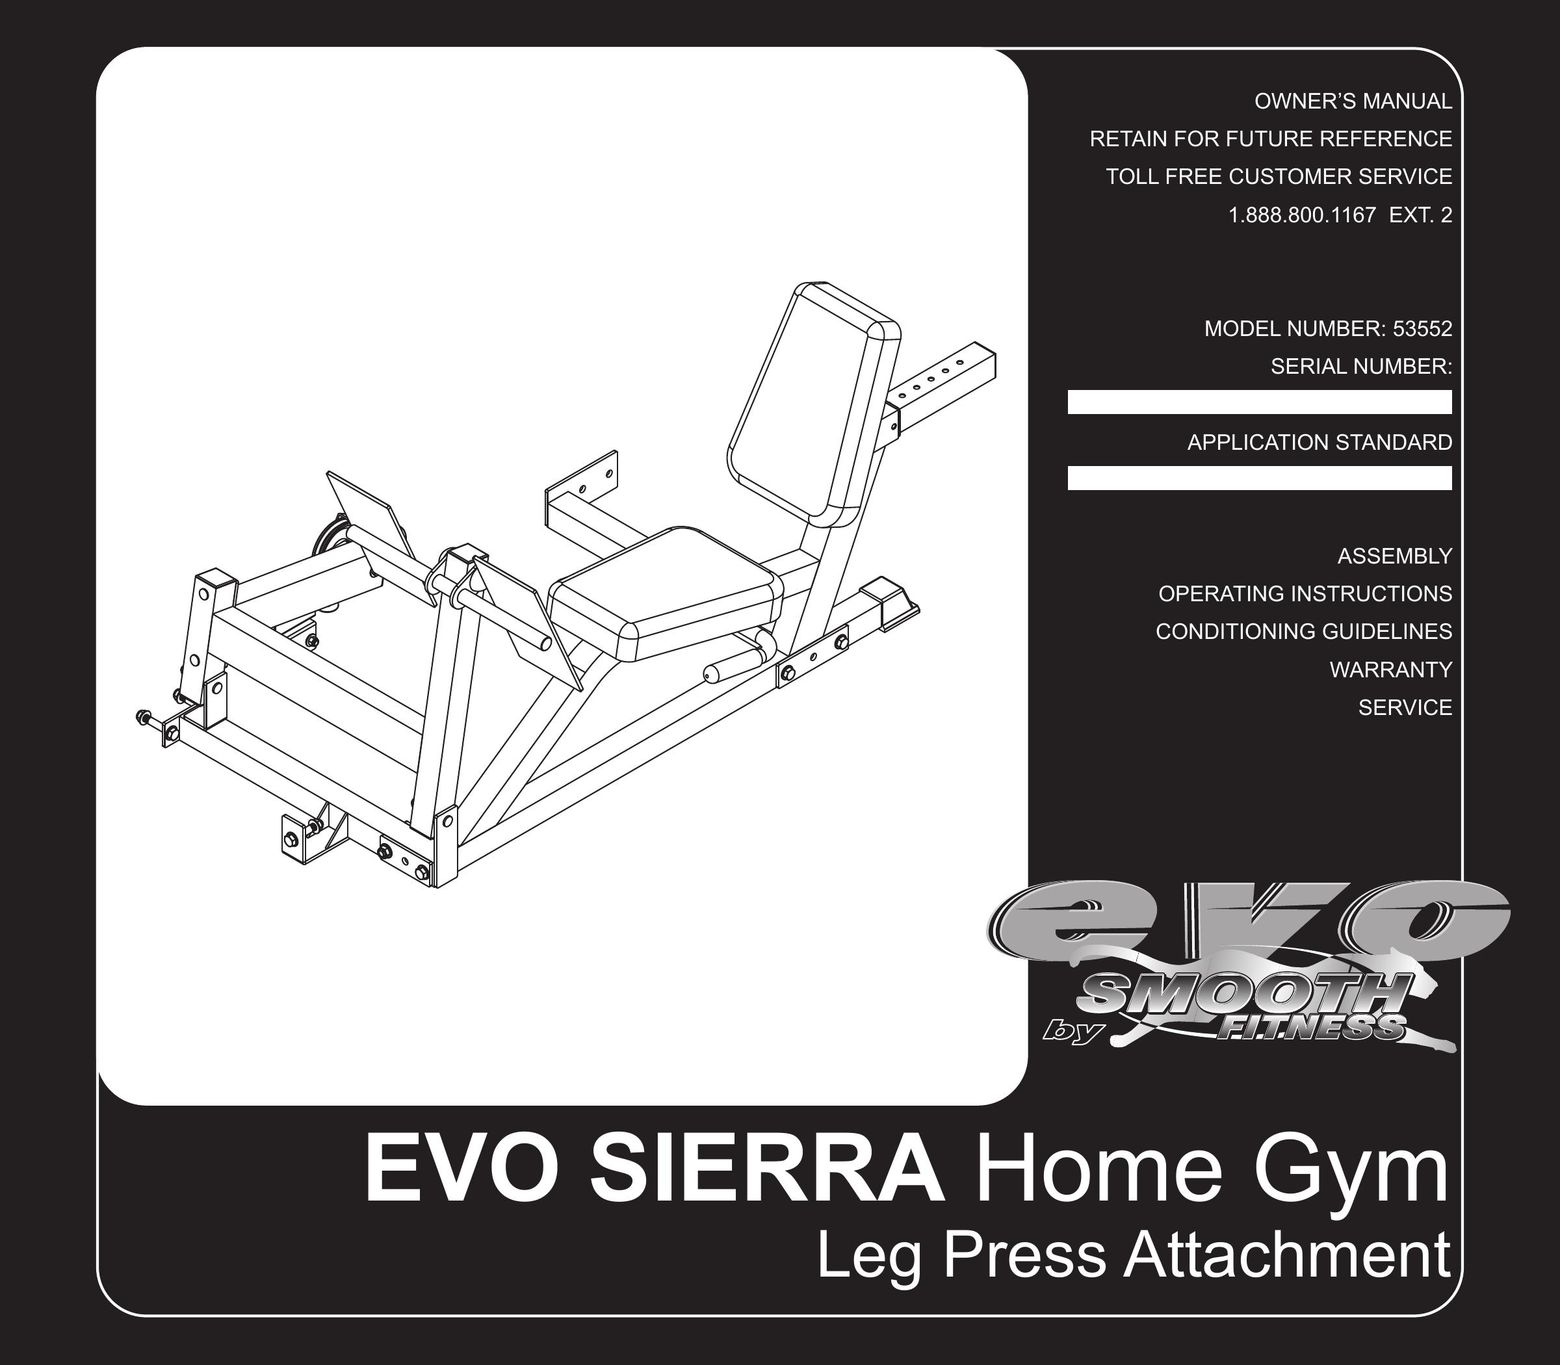 Evo Fitness EVO SIERRA Home Gym Leg Press Attachment Home Gym User Manual